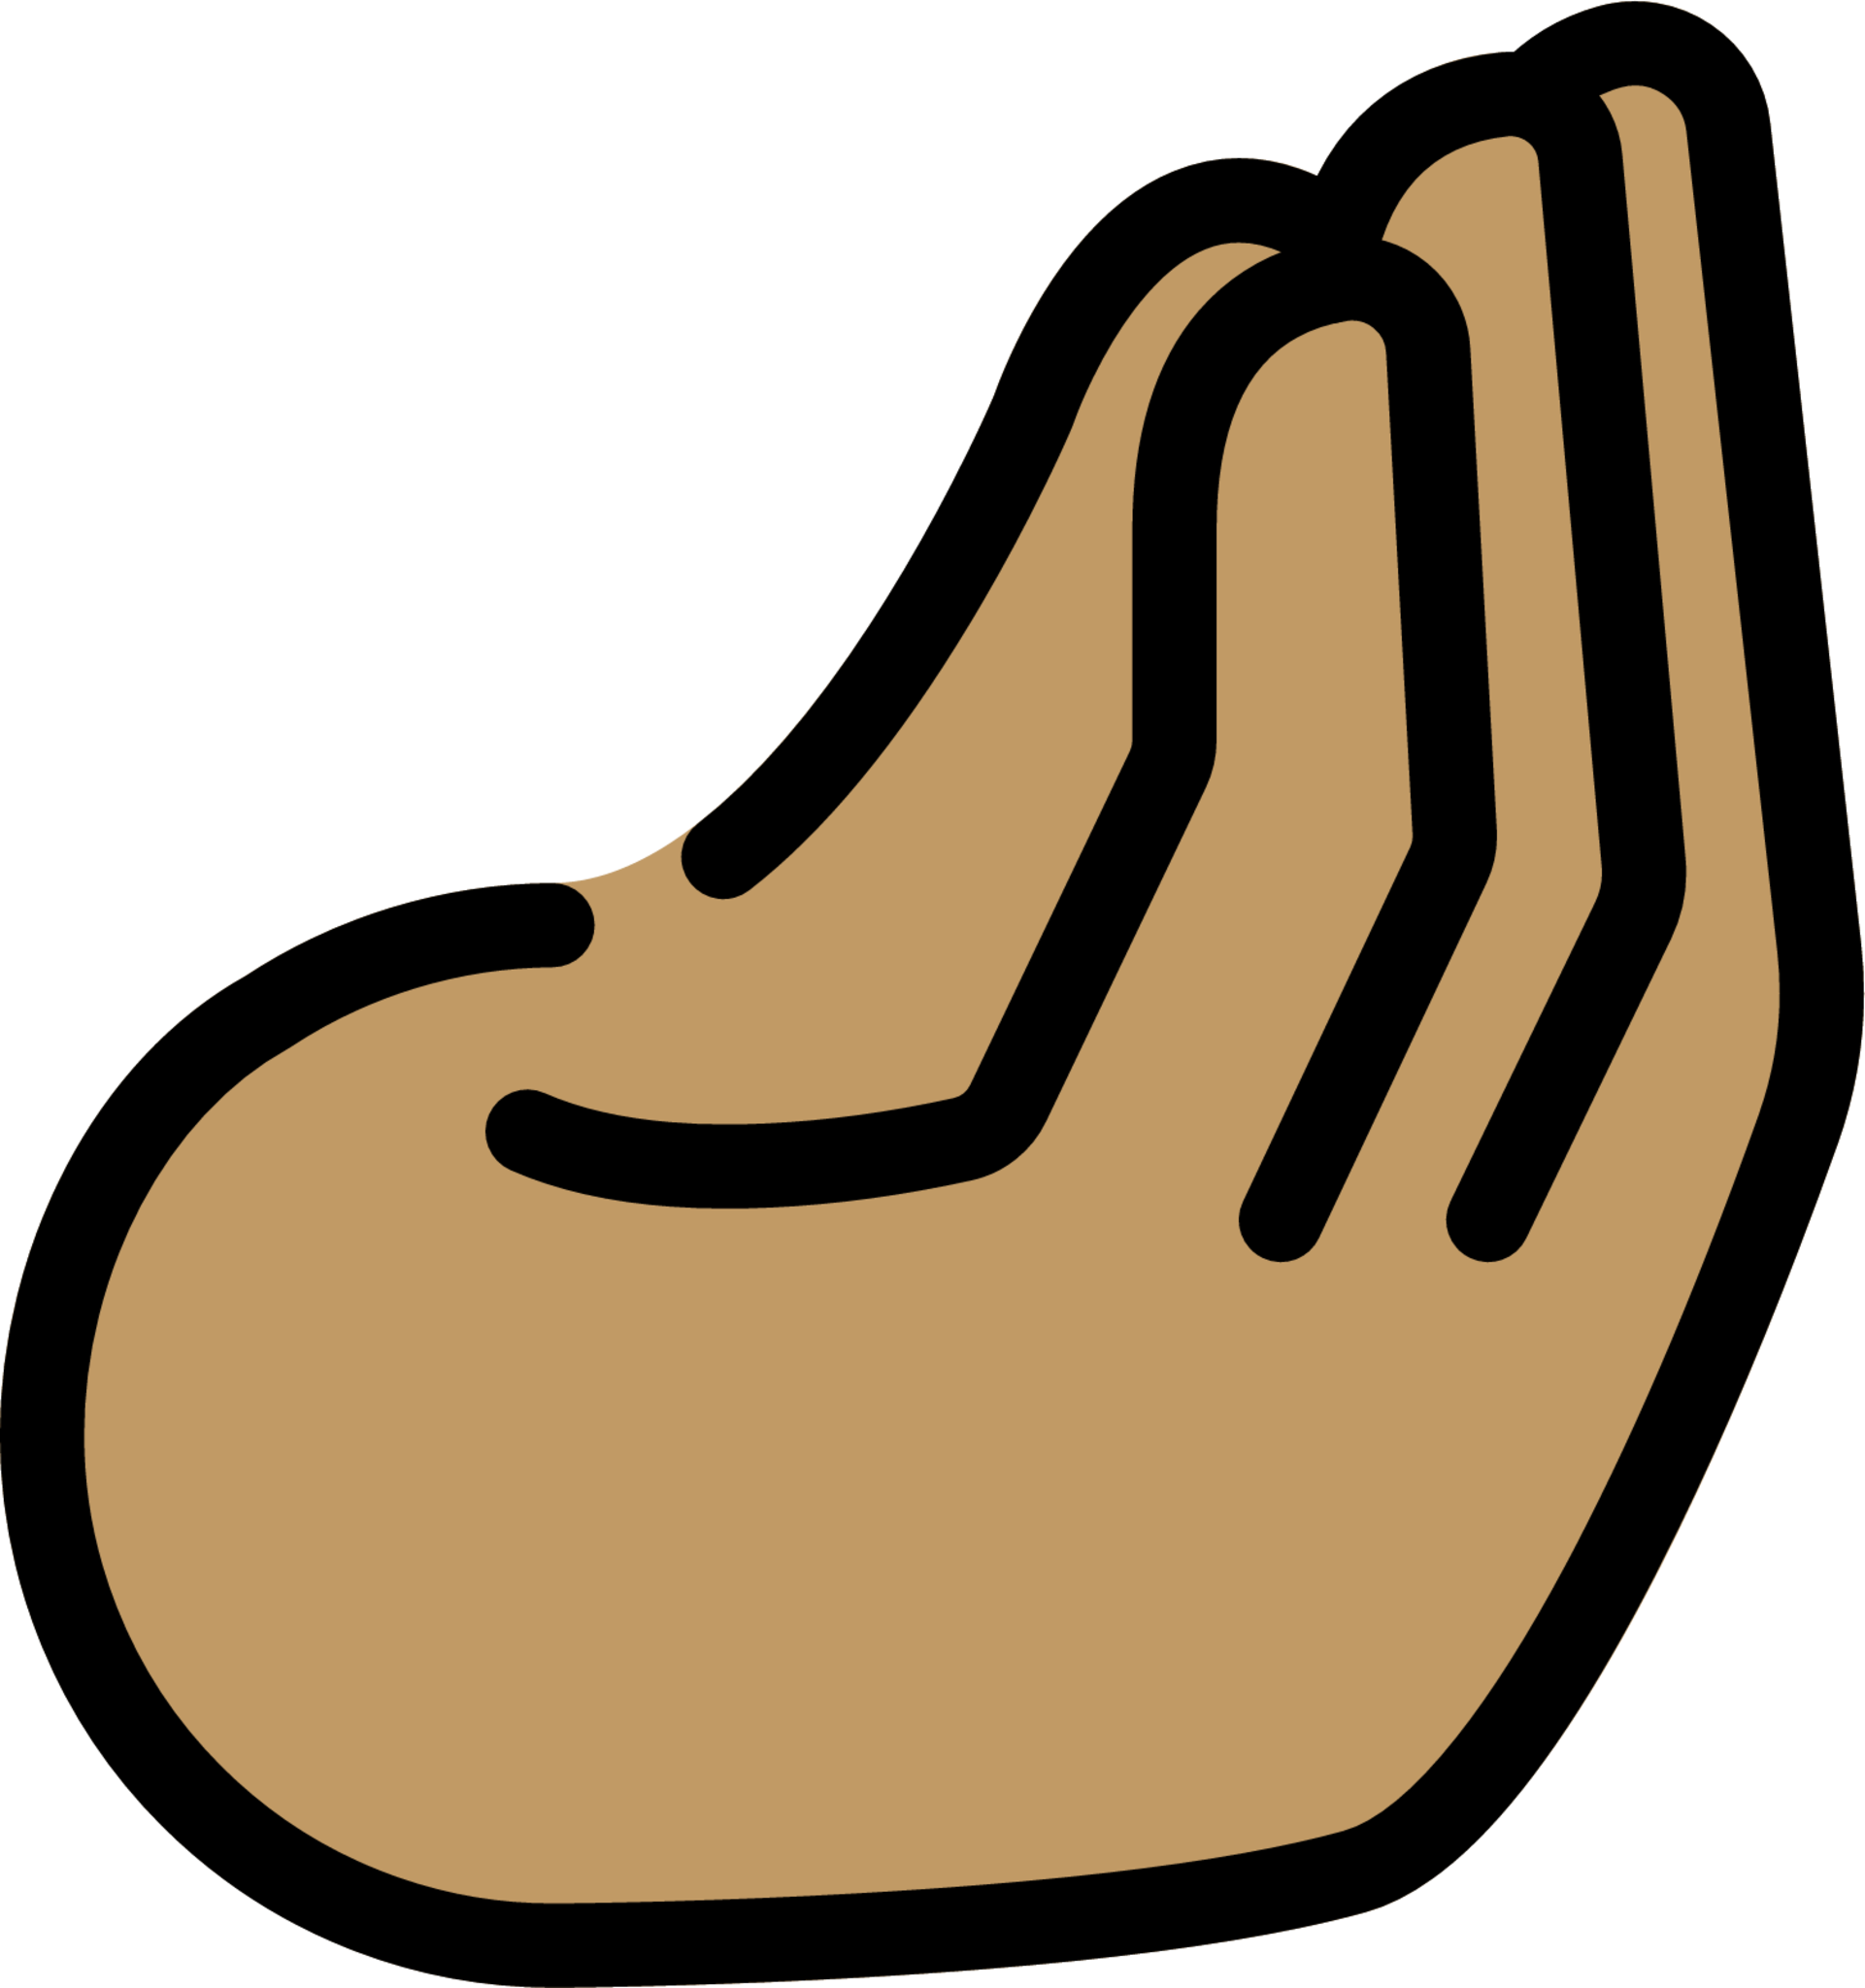 pinched fingers: medium skin tone emoji